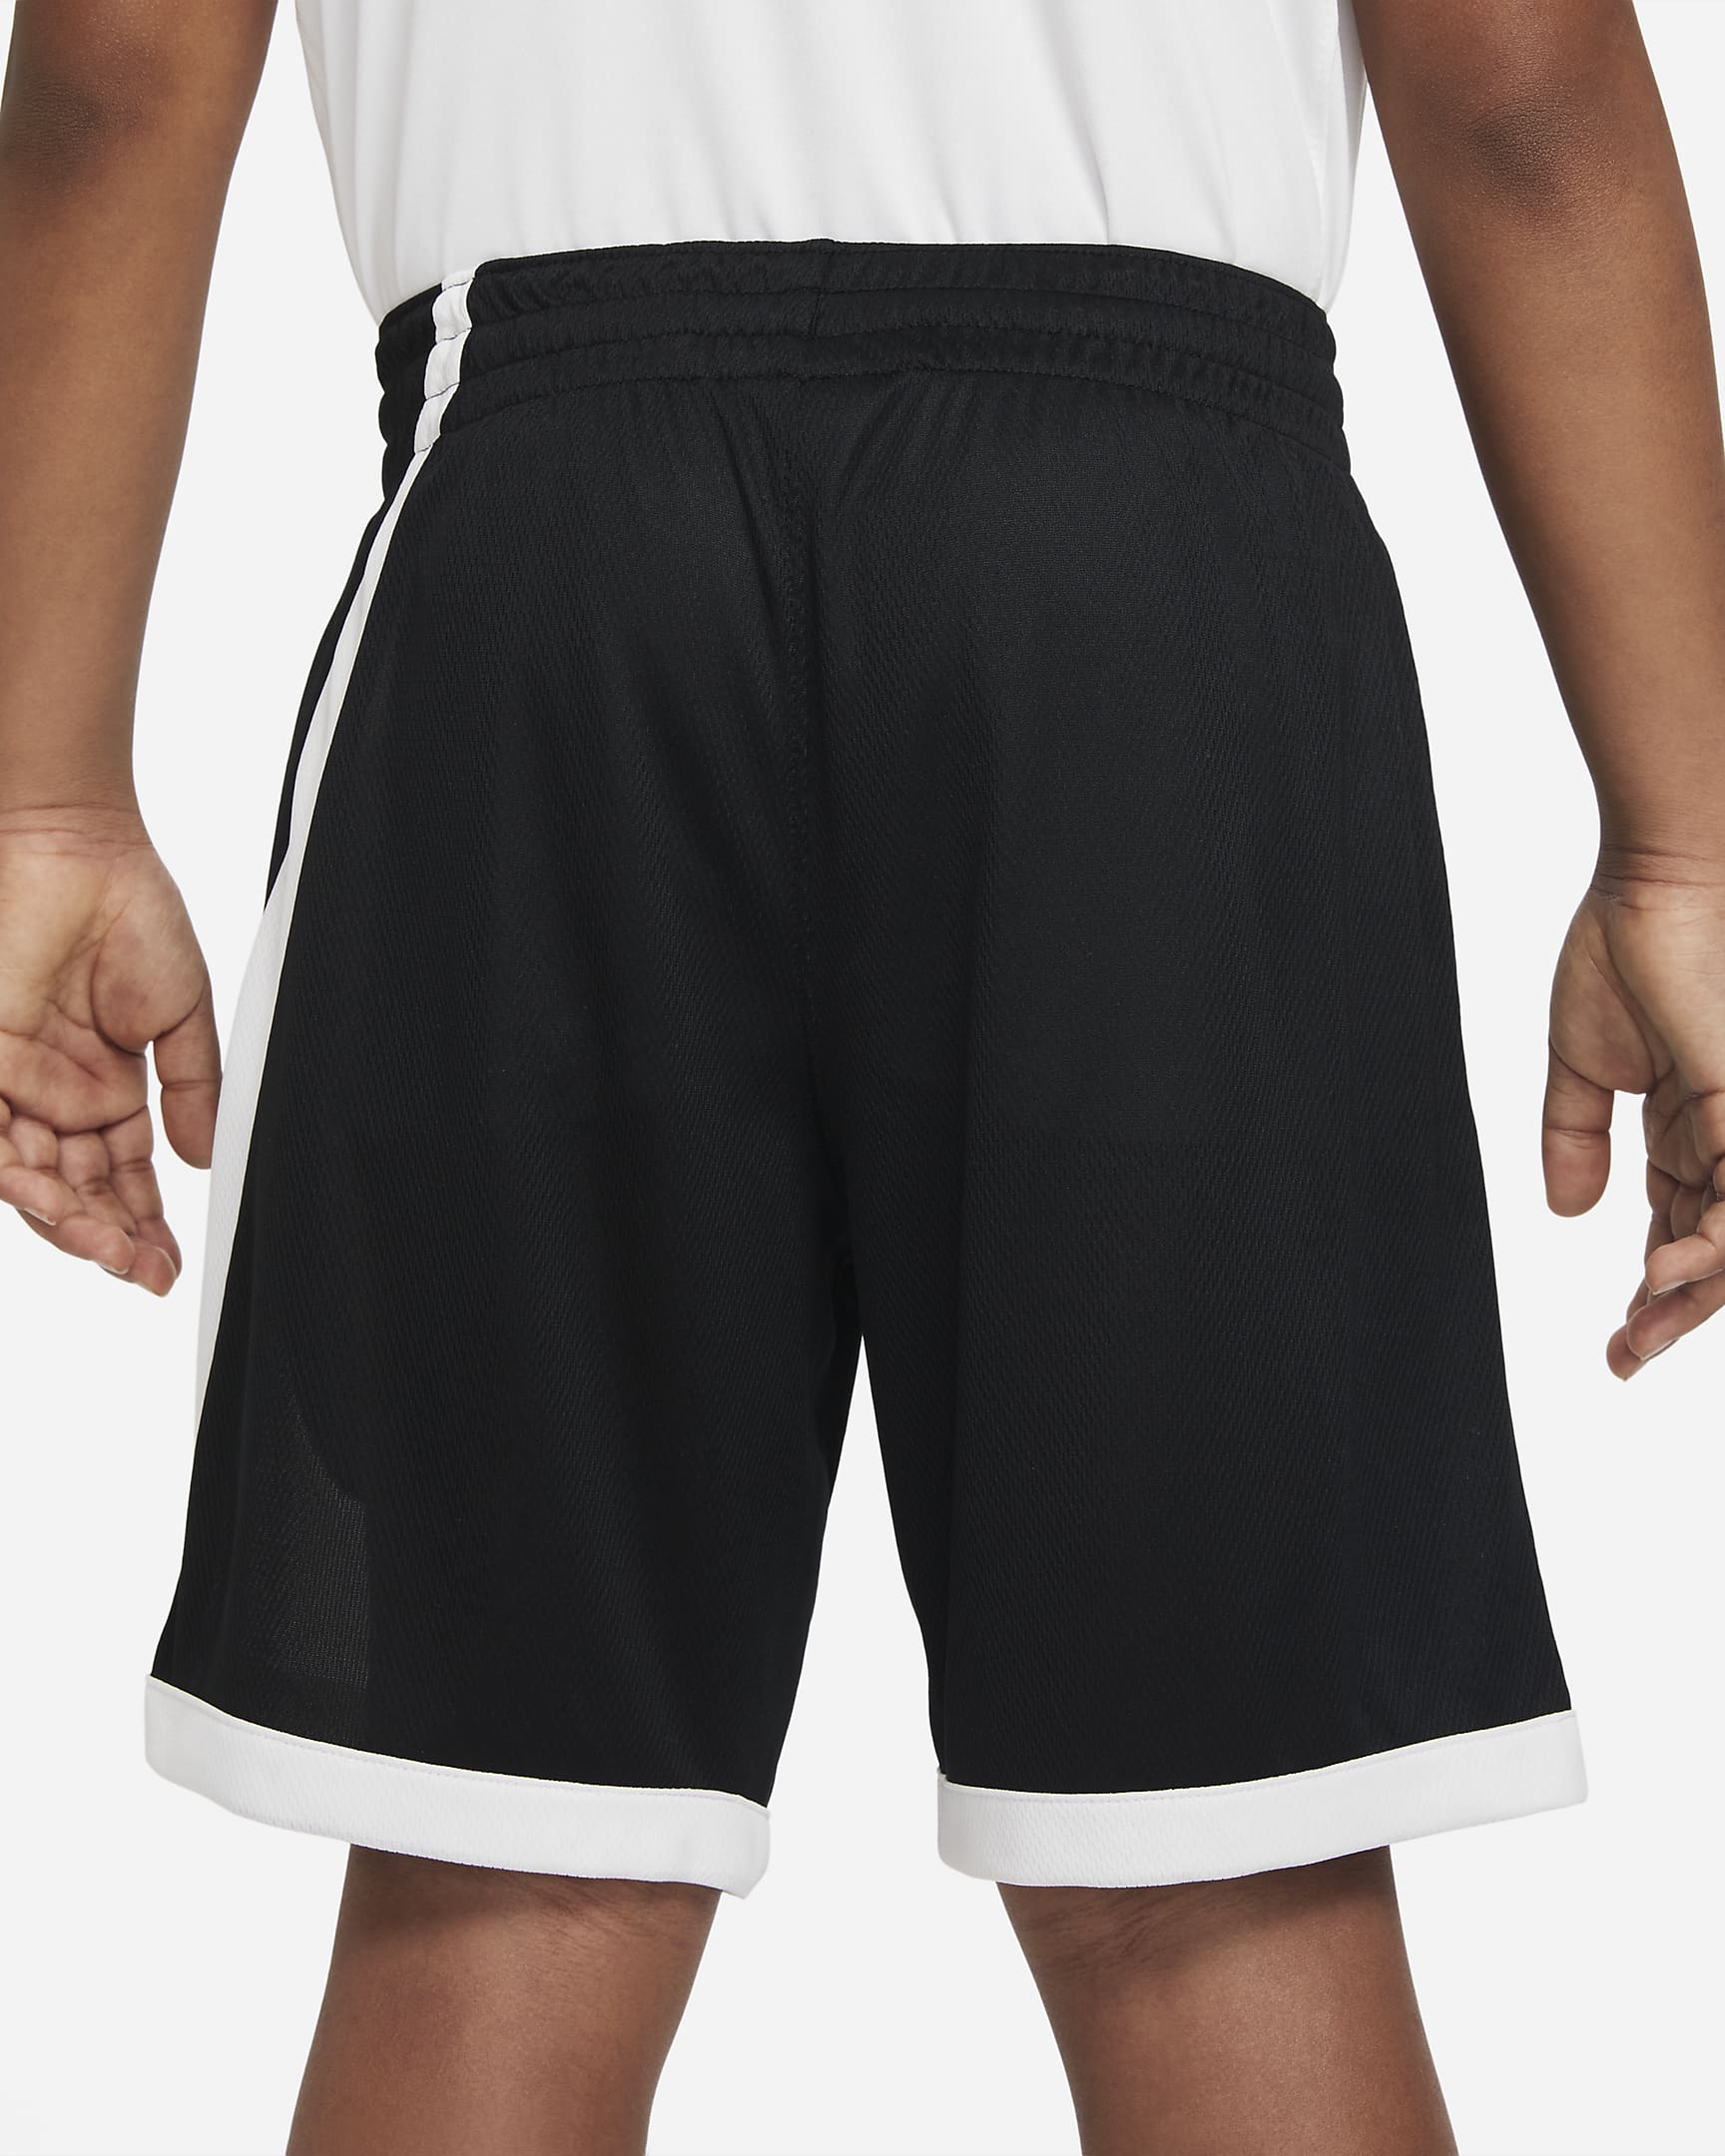 Nike Dri-Fit Basketball Shorts - Nohble